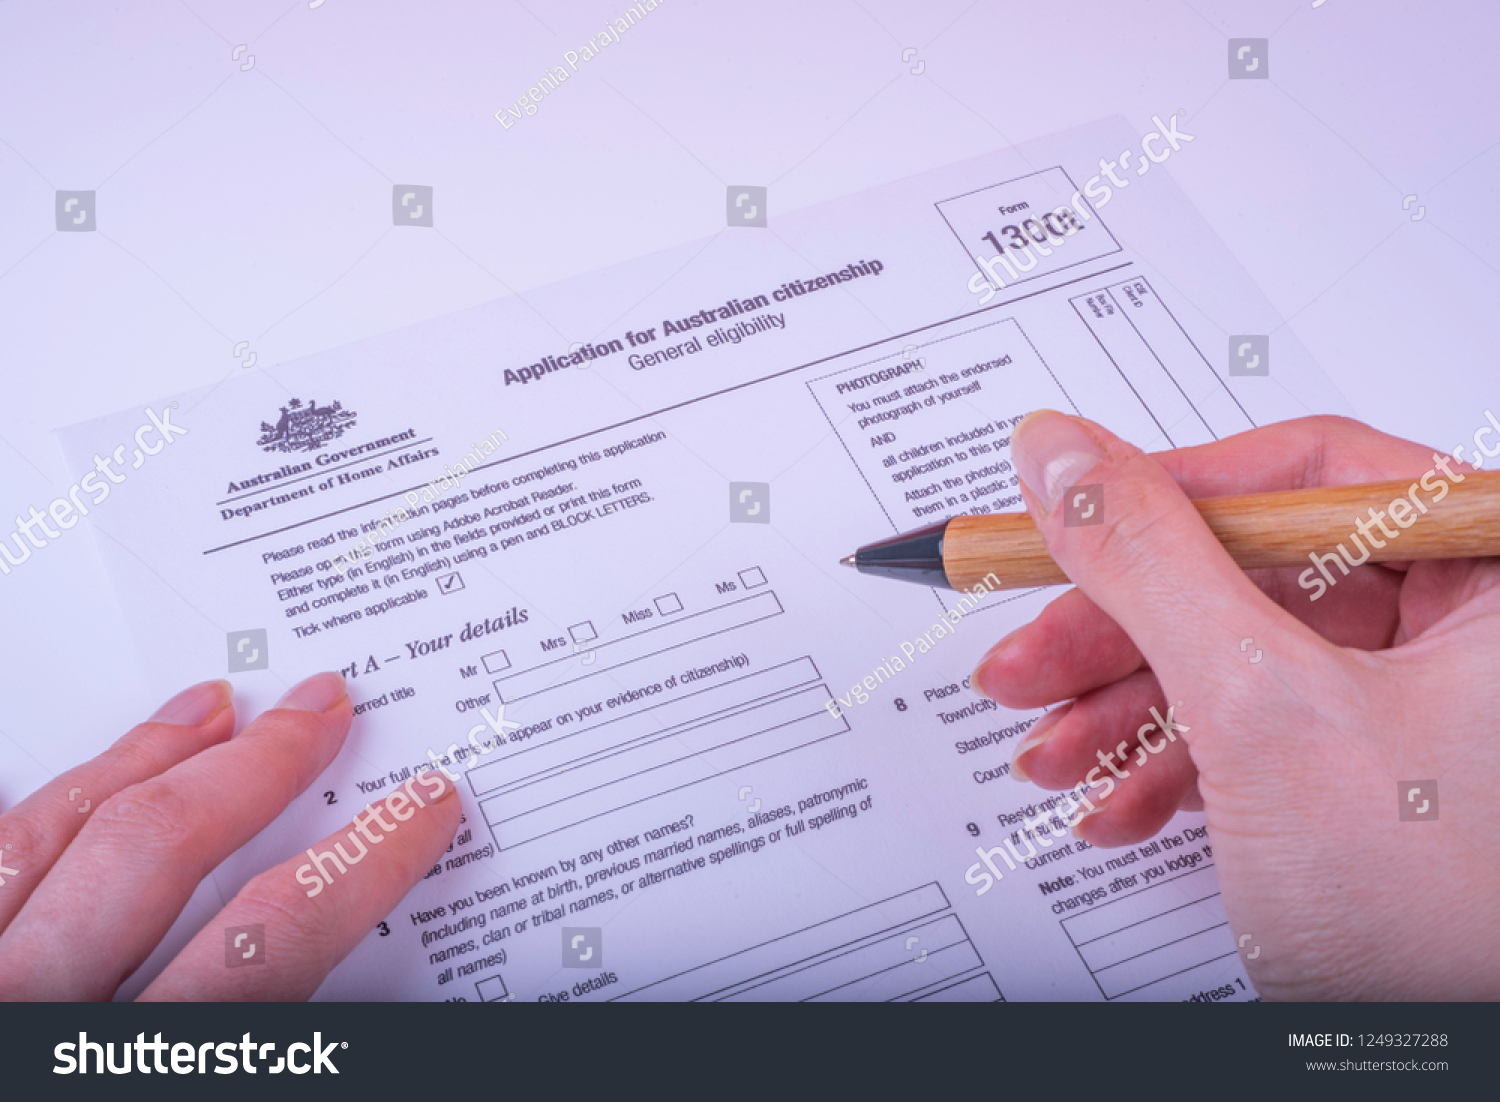 Application Form 1300t Australian Citizenship Stock Photo (Edit Now) 1249327288